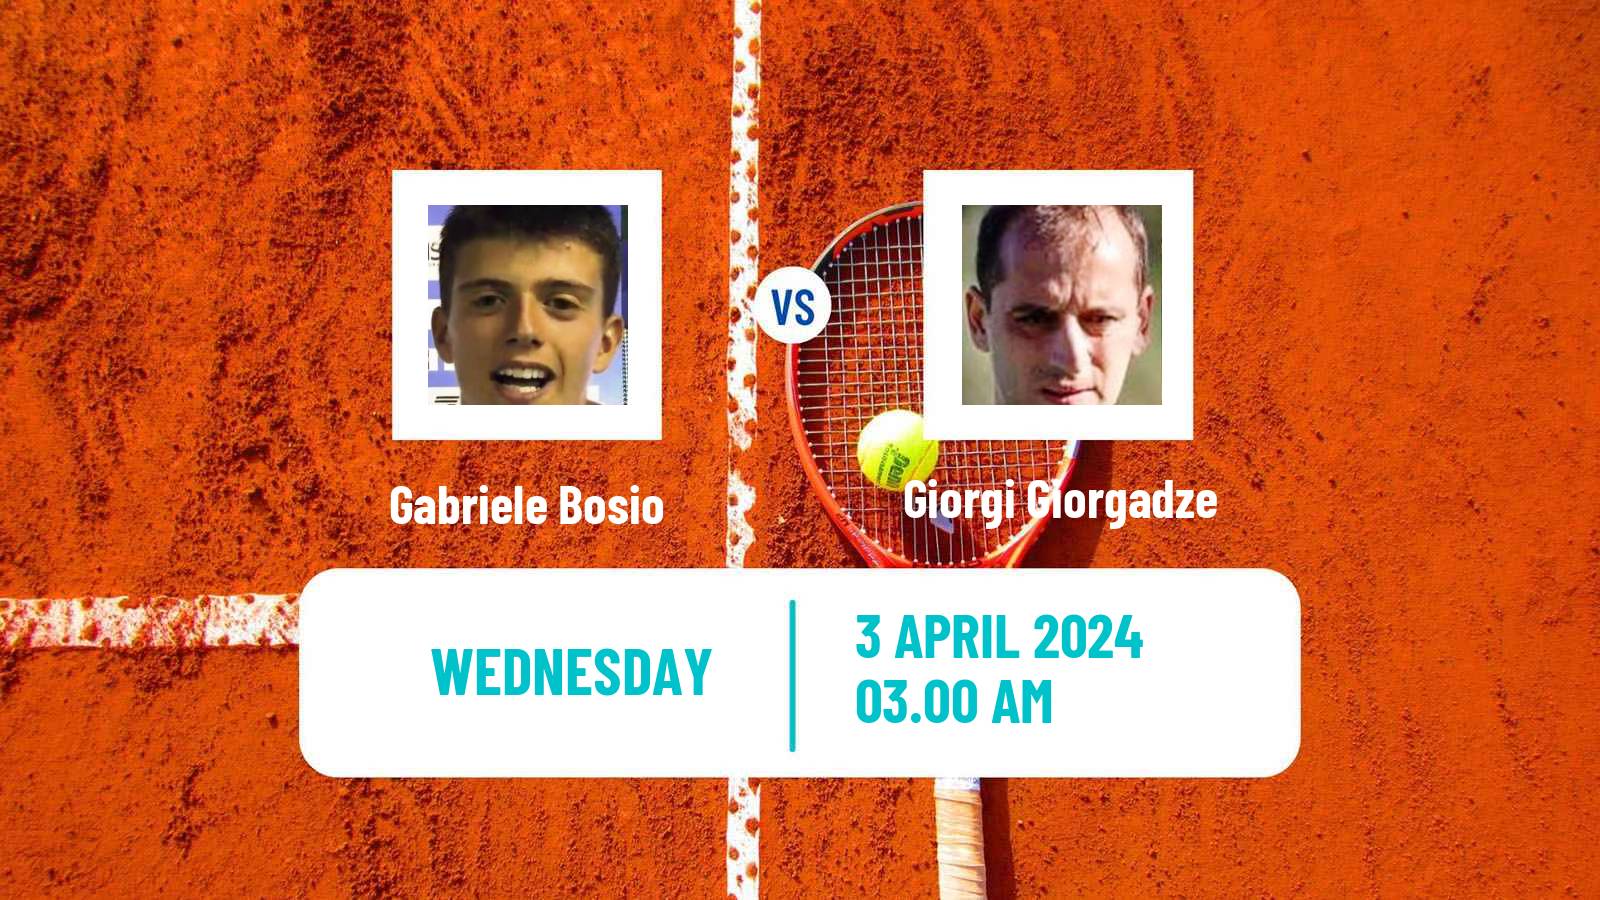 Tennis ITF M15 Antalya 9 Men Gabriele Bosio - Giorgi Giorgadze